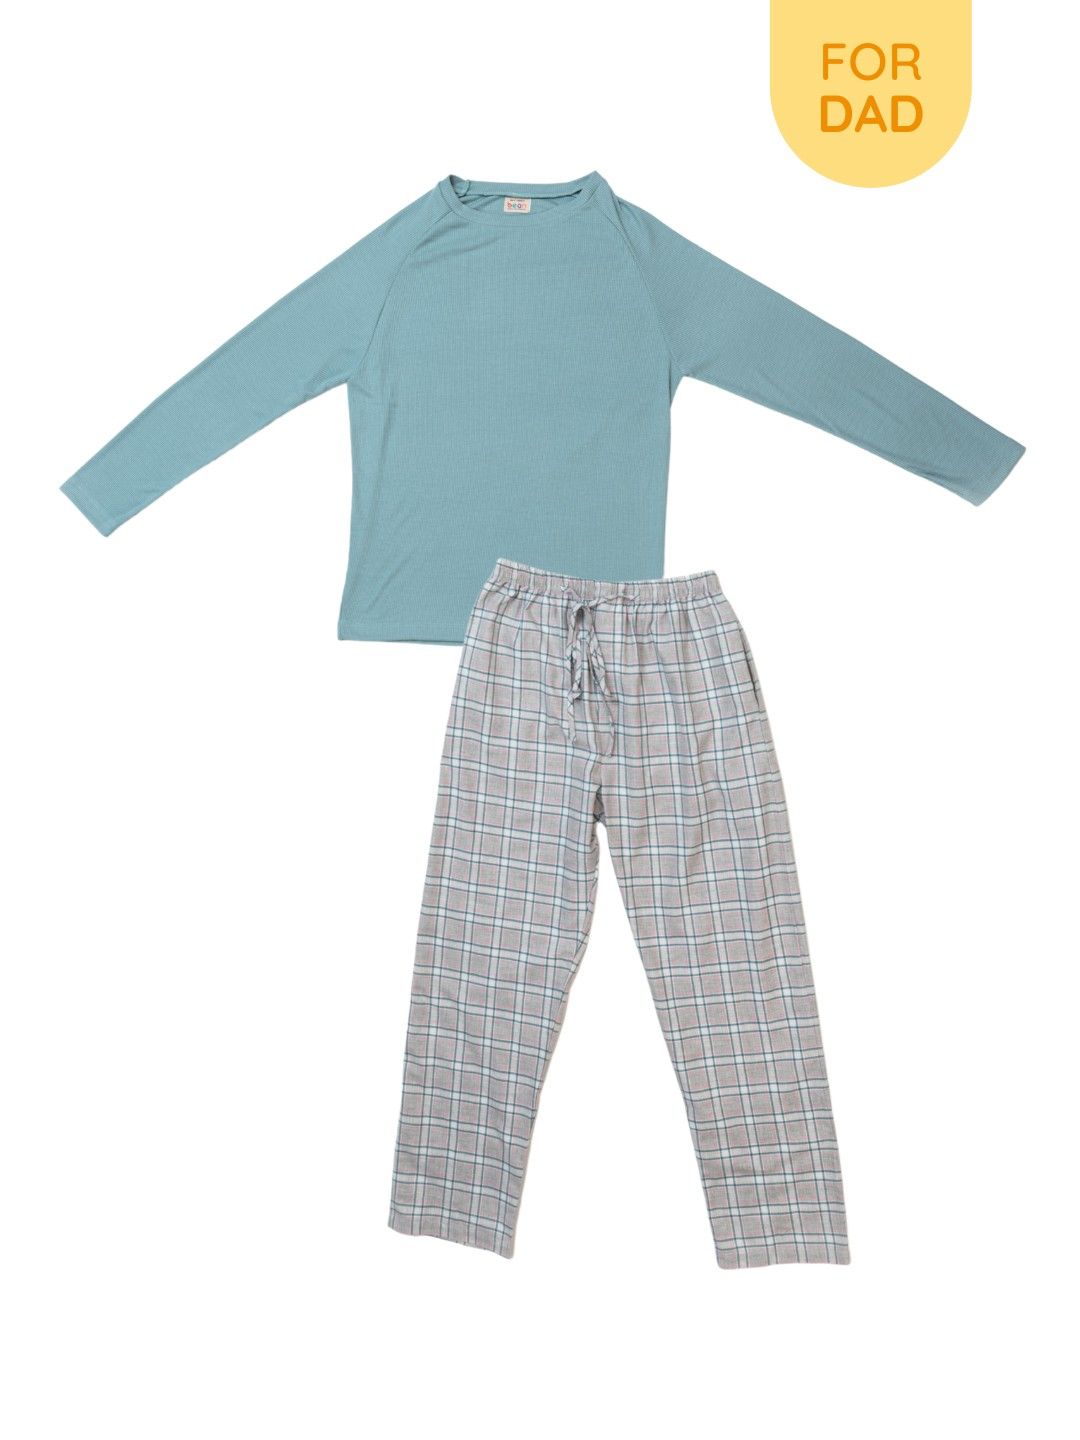 bean fashion Plaid Sleep Pajama Set for Dad